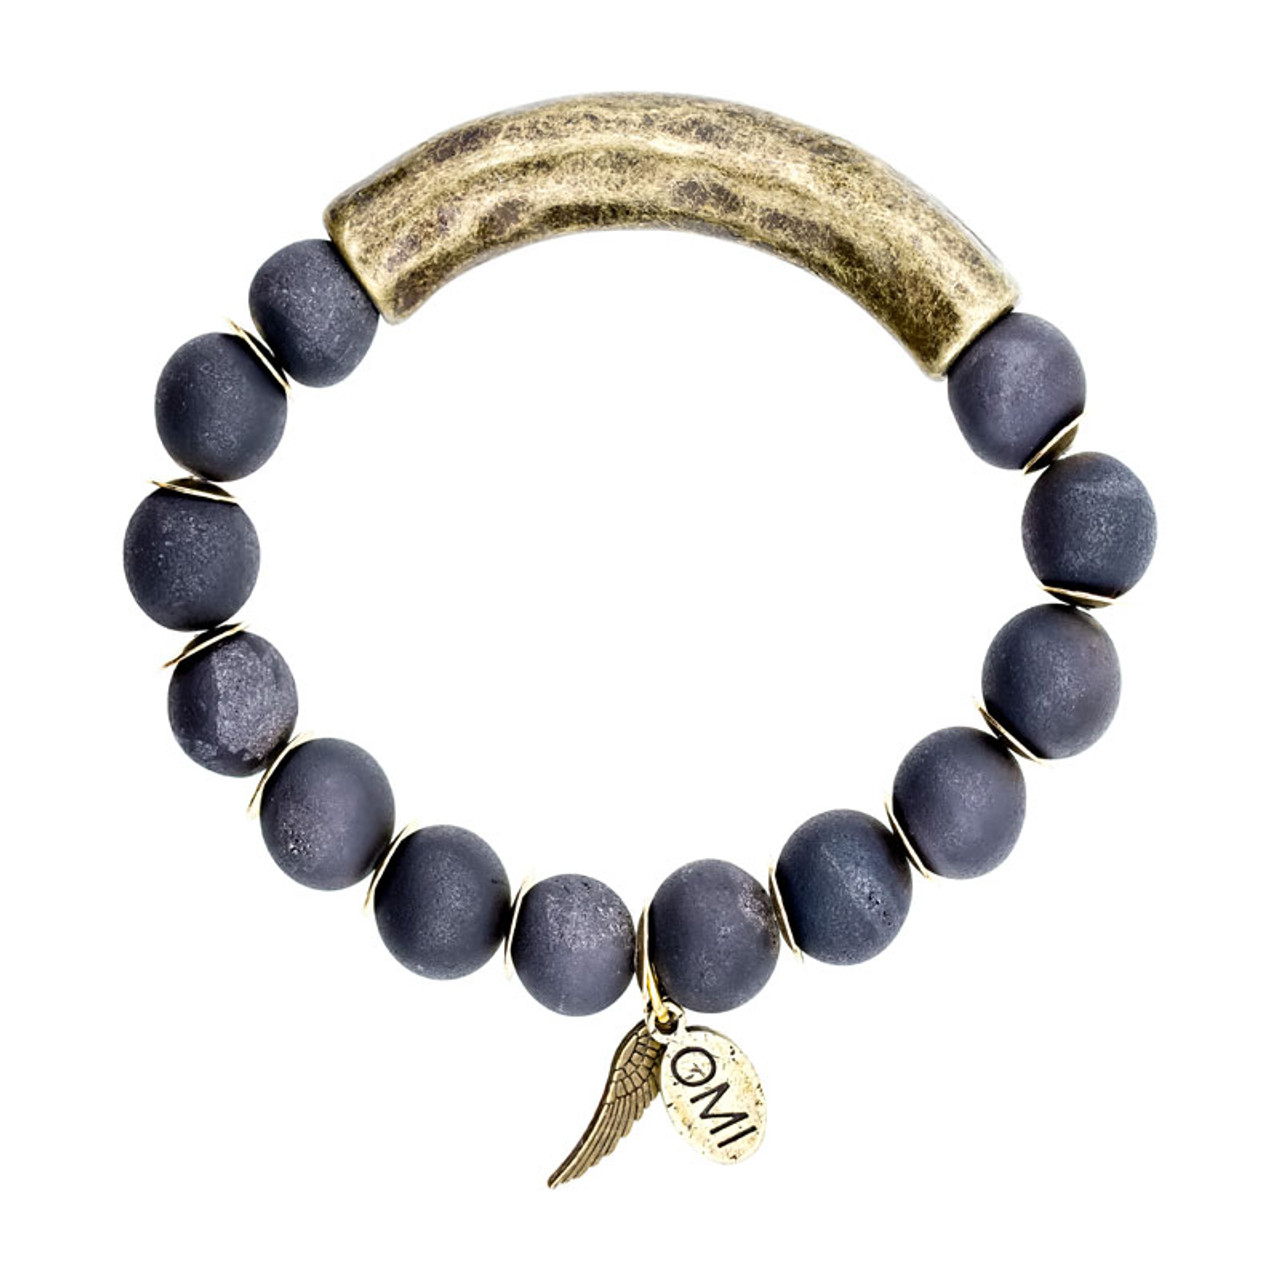 Buy wholesale Golden Jerry bracelet with black Agate stones